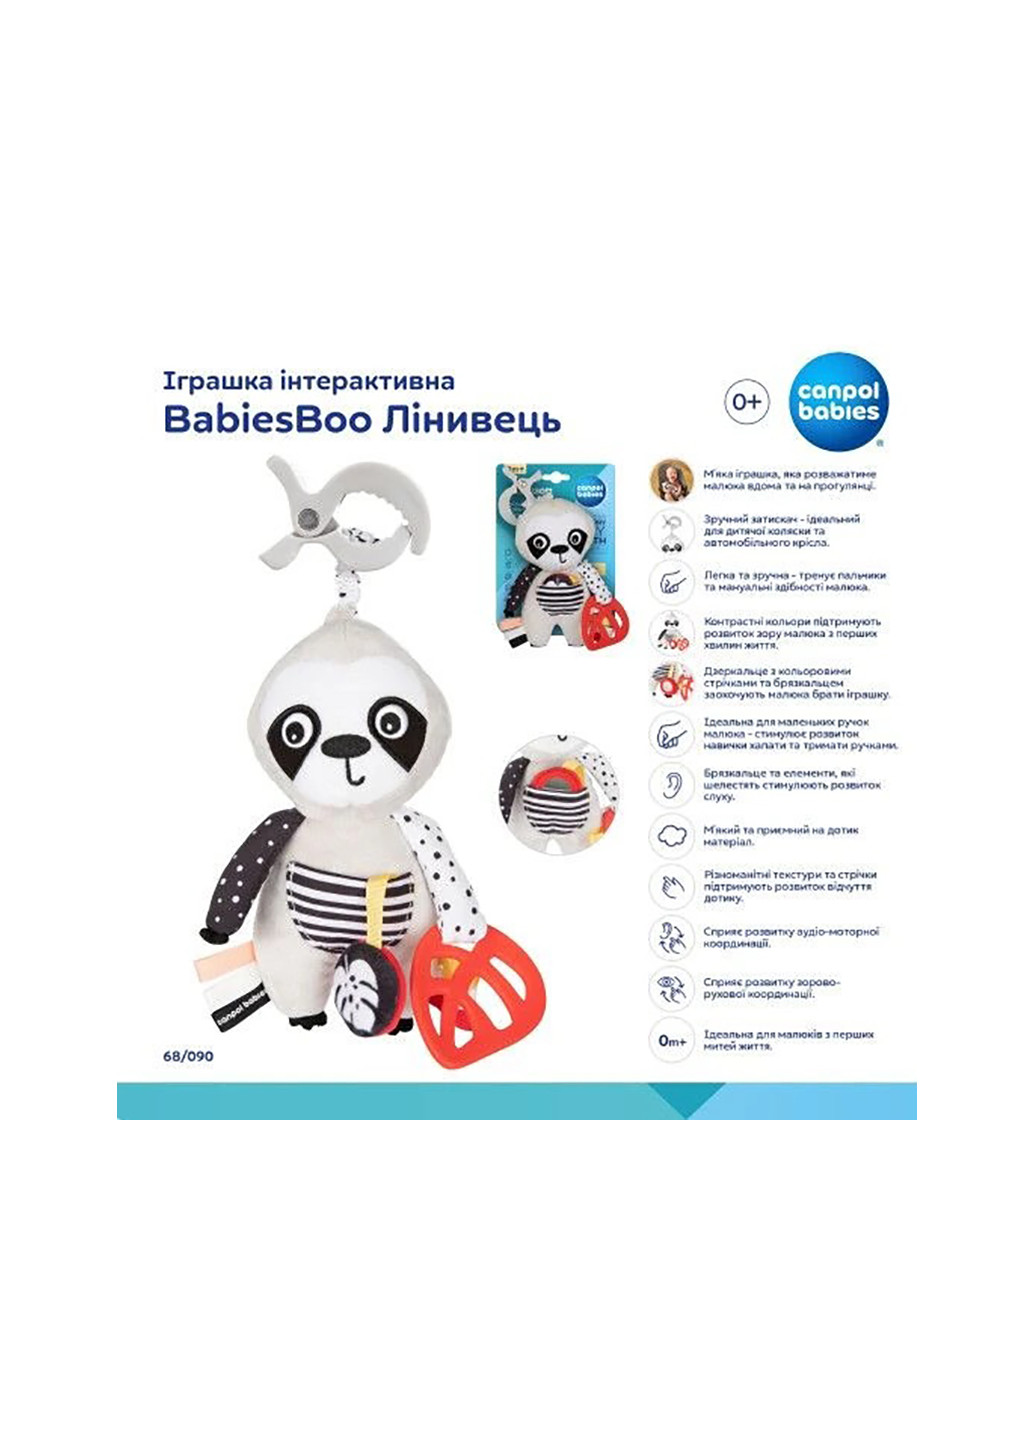 Игрушка интерактивная BabiesBoo Линивец 68/090 Canpol Babies (275082029)